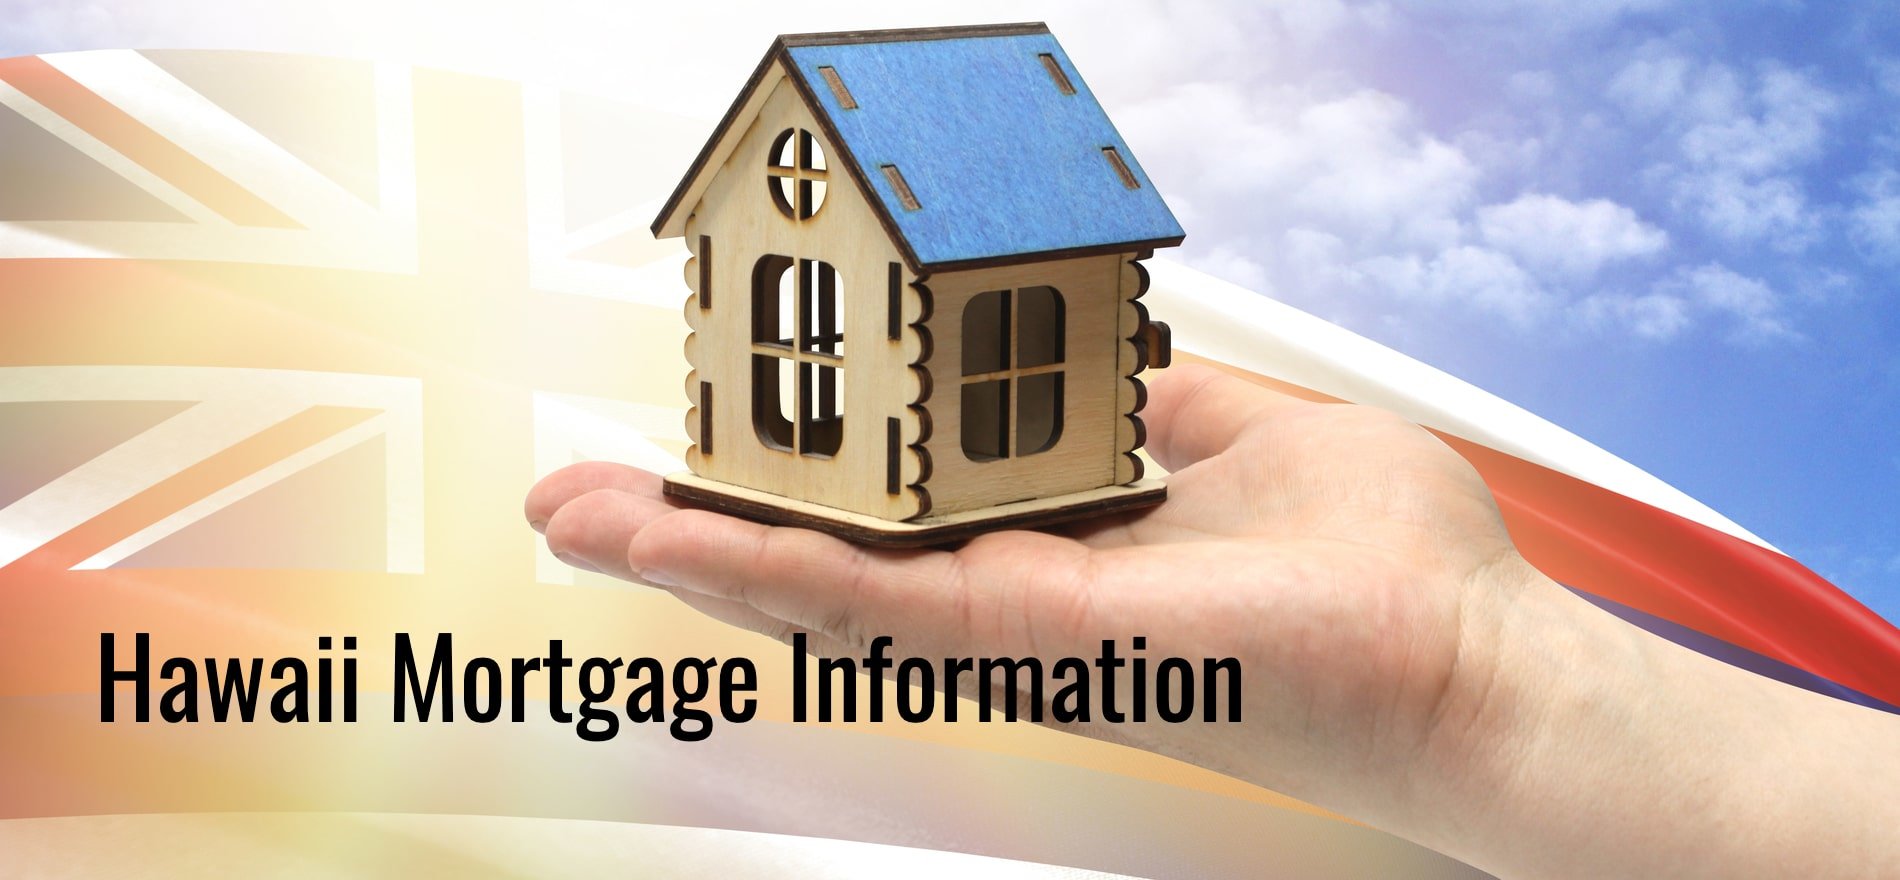 Hawaii Mortgage Information